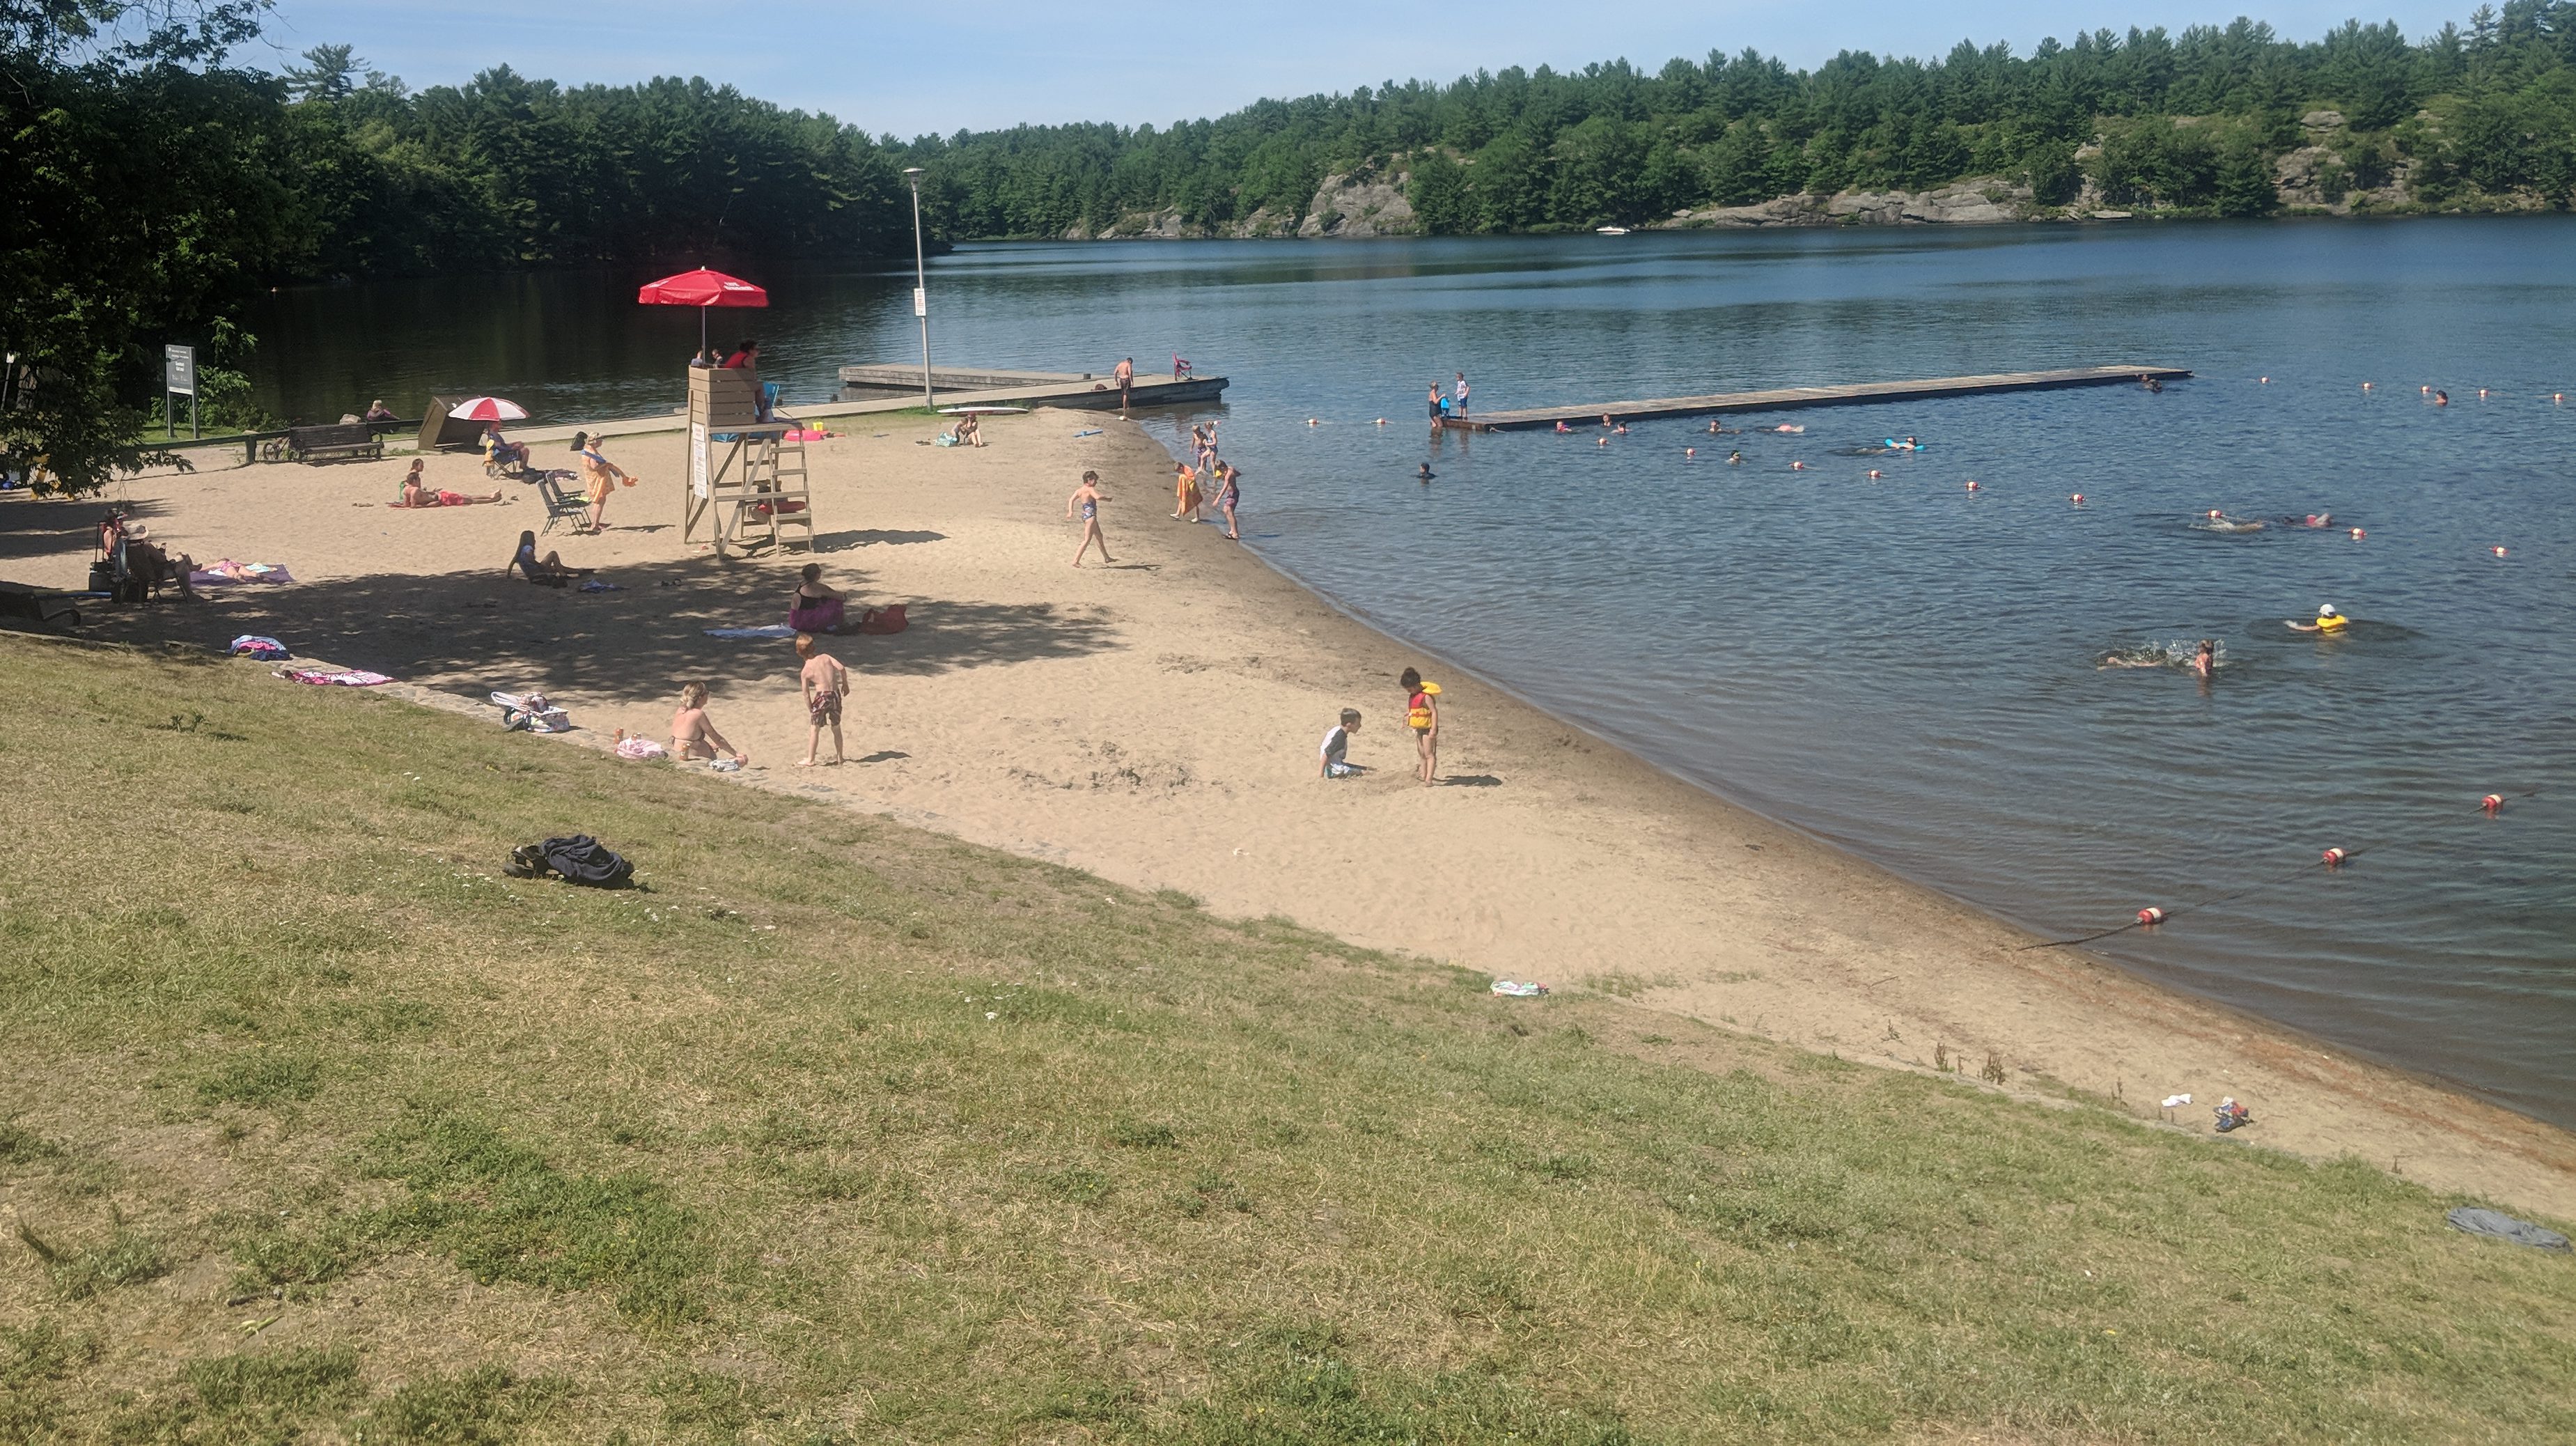 swim-advisory-lifted-at-gull-lake-my-muskoka-now